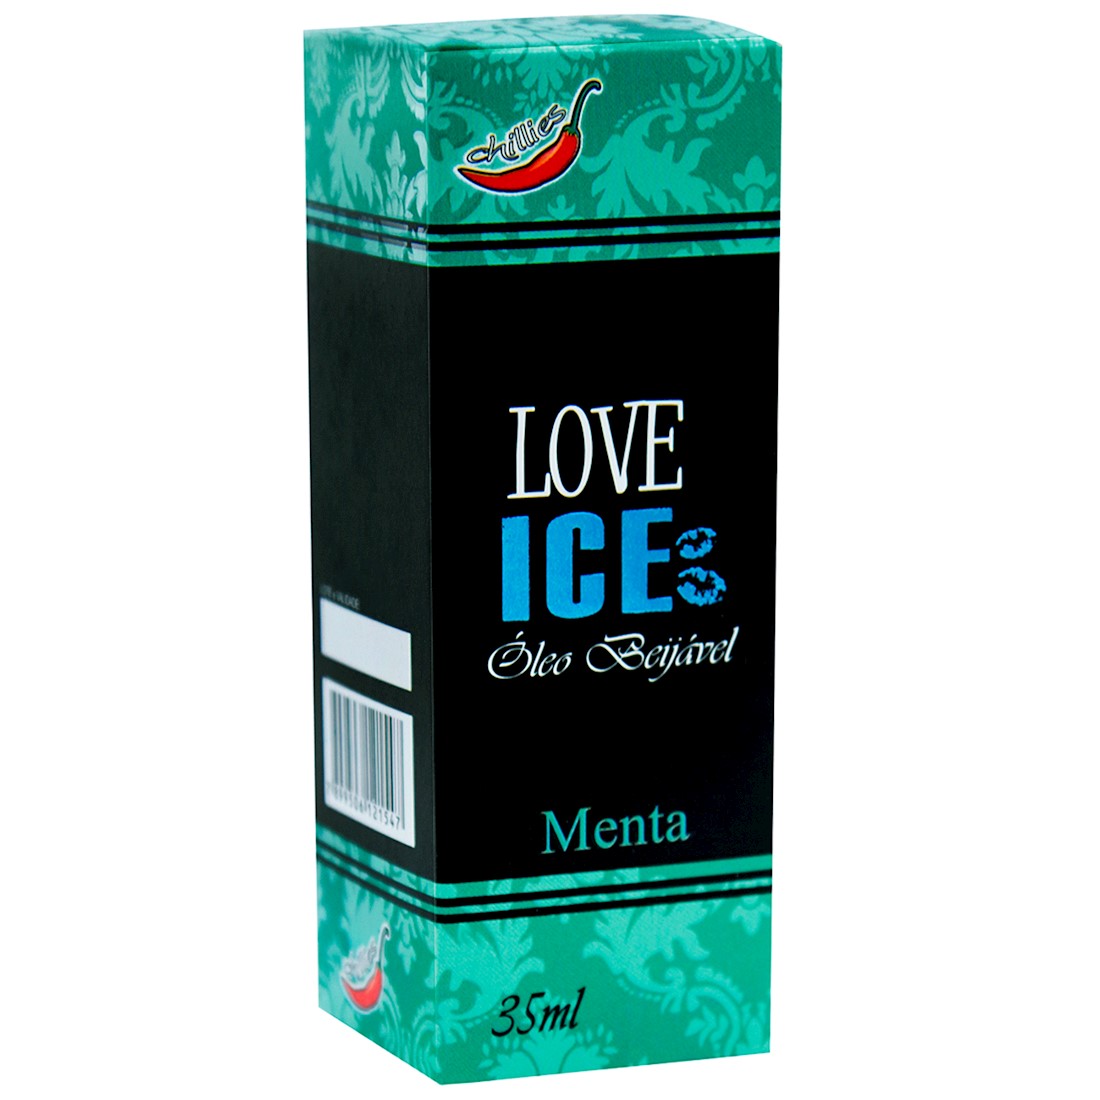 Love Ice Menta Chillies 30ml - C136